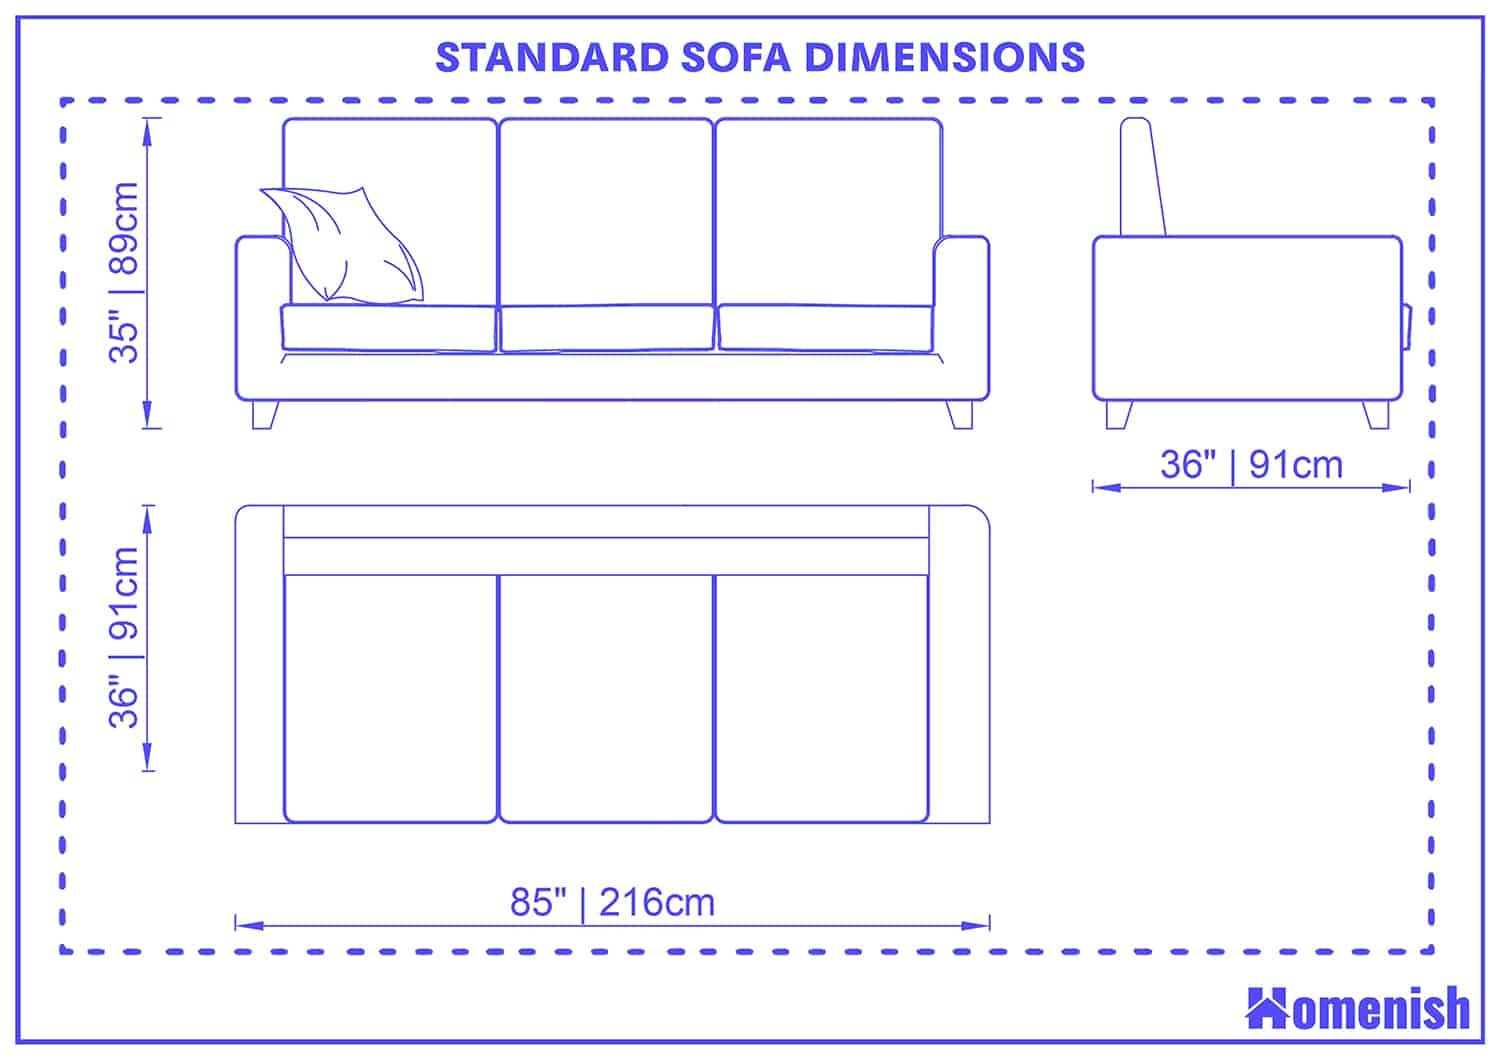 Standard sofa dimensions